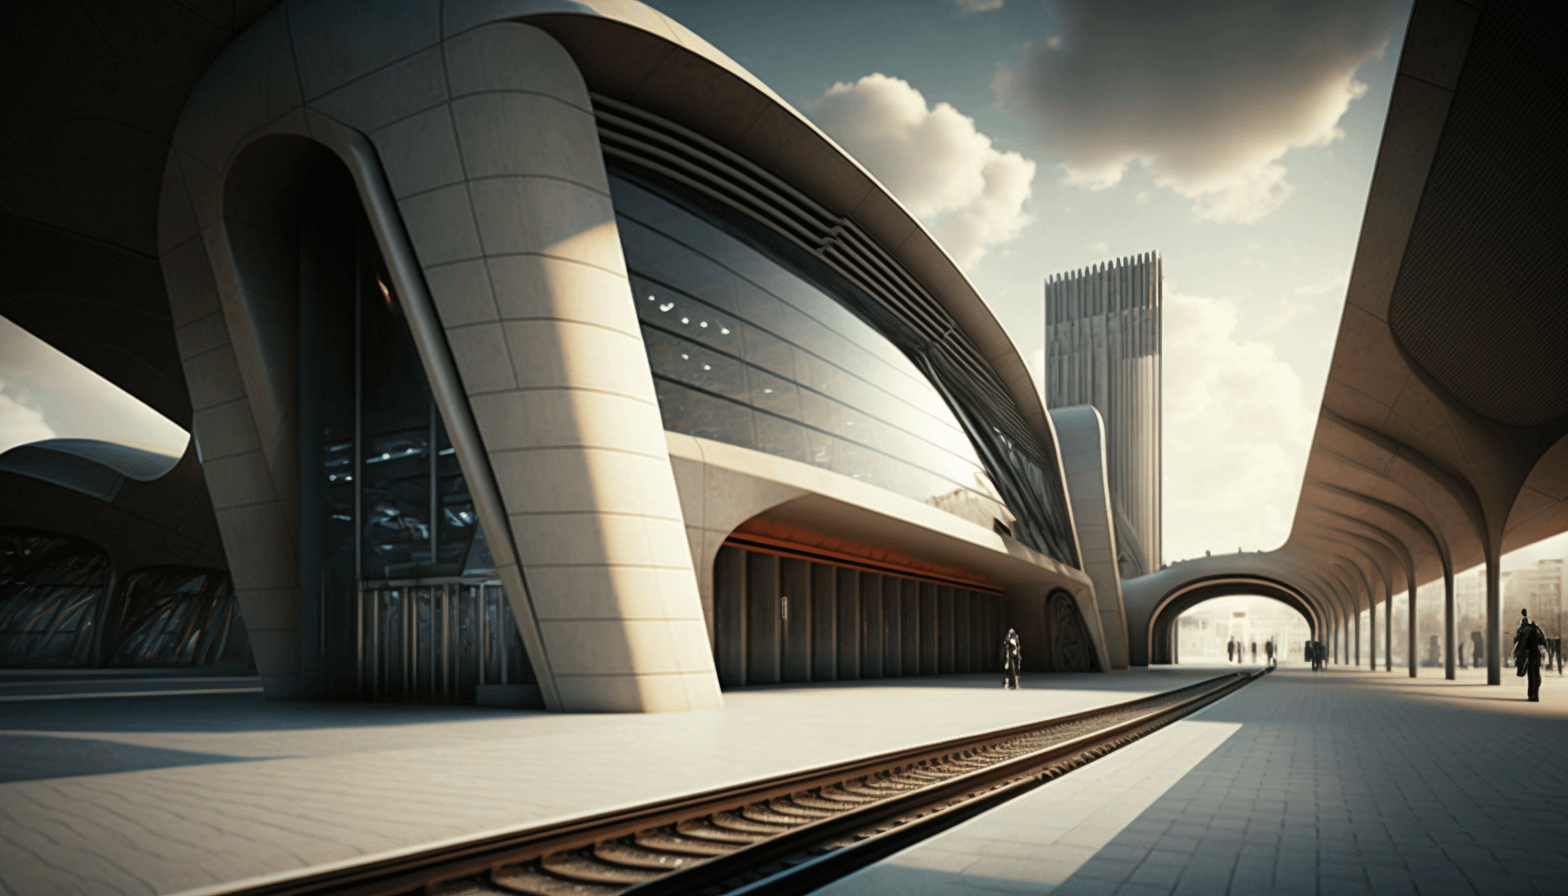 Msintez urban landscapes a sleek and futuristic train station